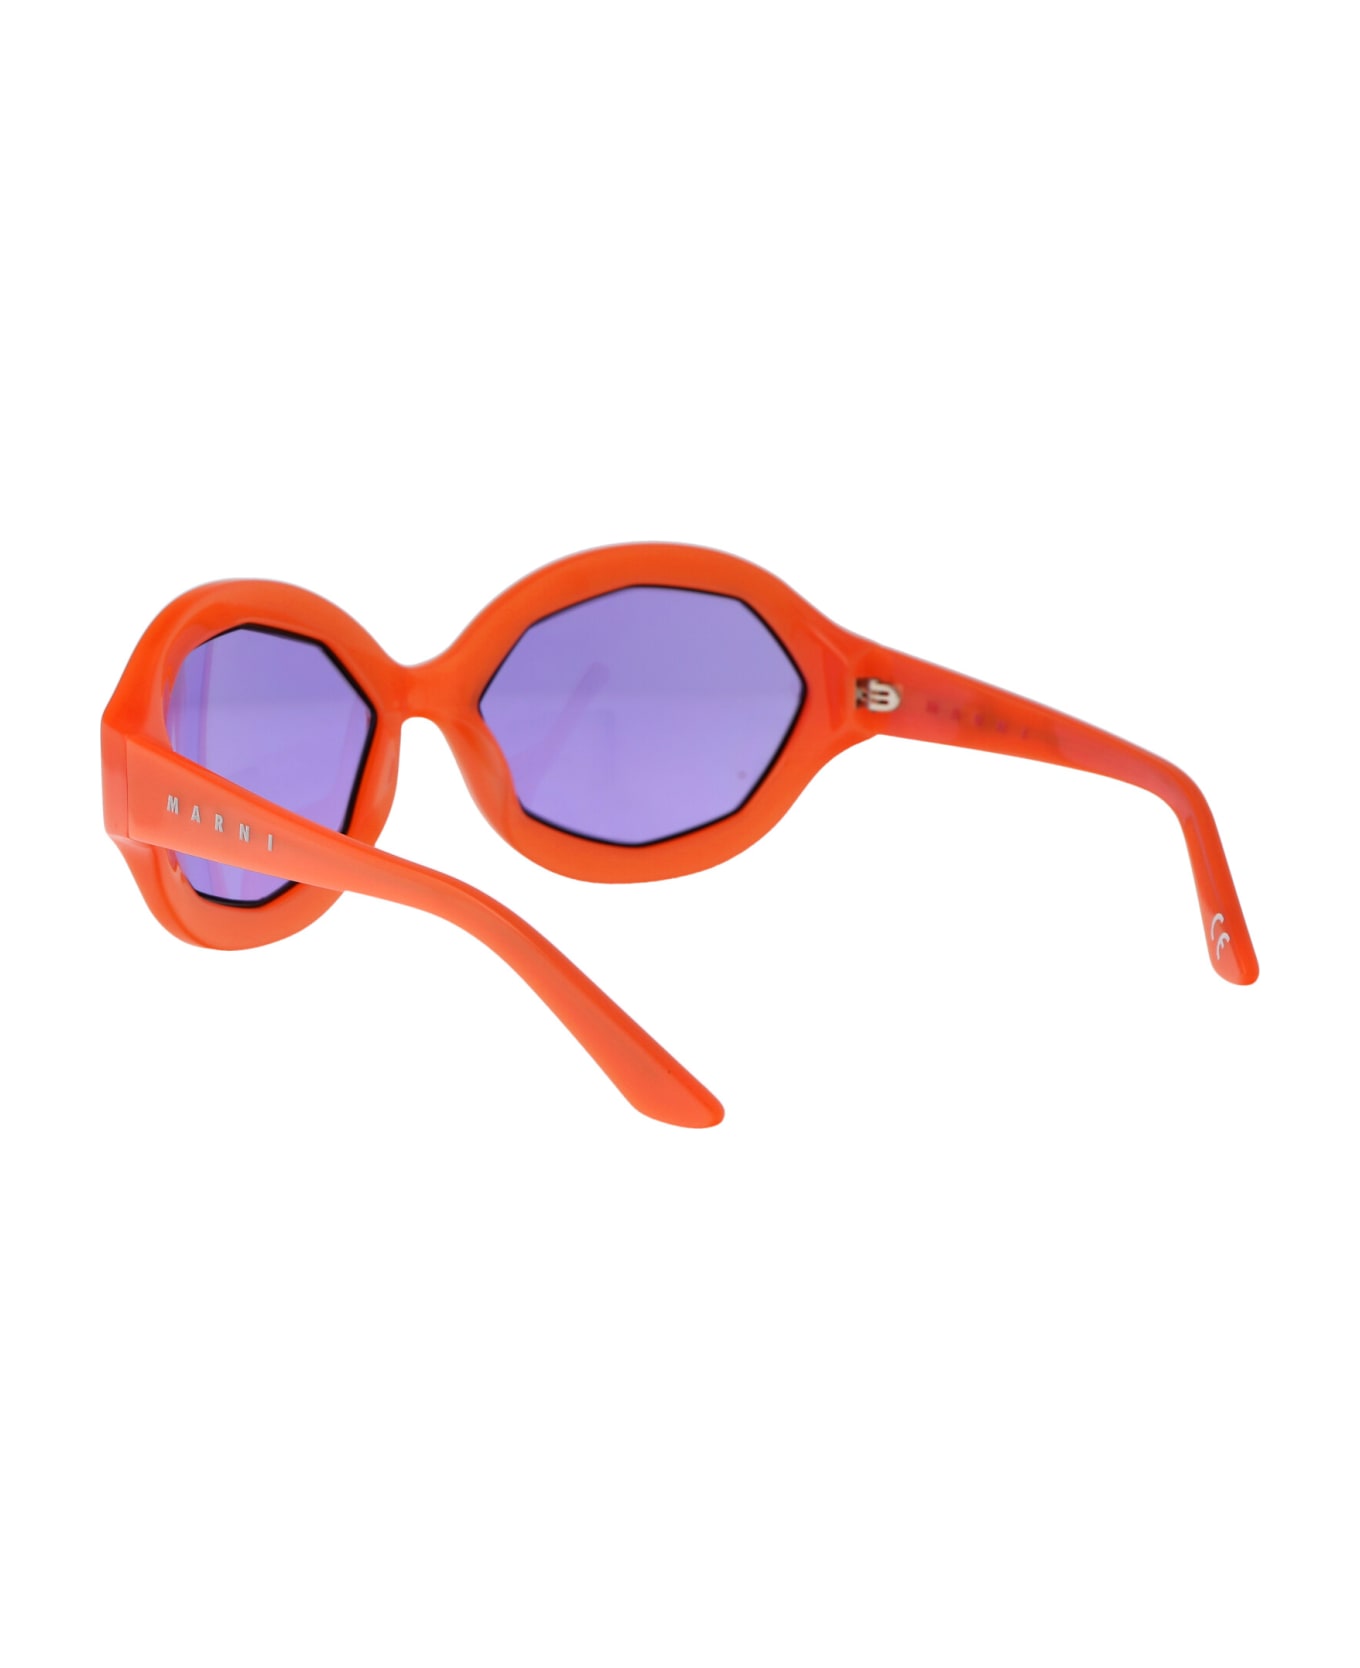 Marni Eyewear Cumulus Cloud Sunglasses - CLOUD ORANGE サングラス